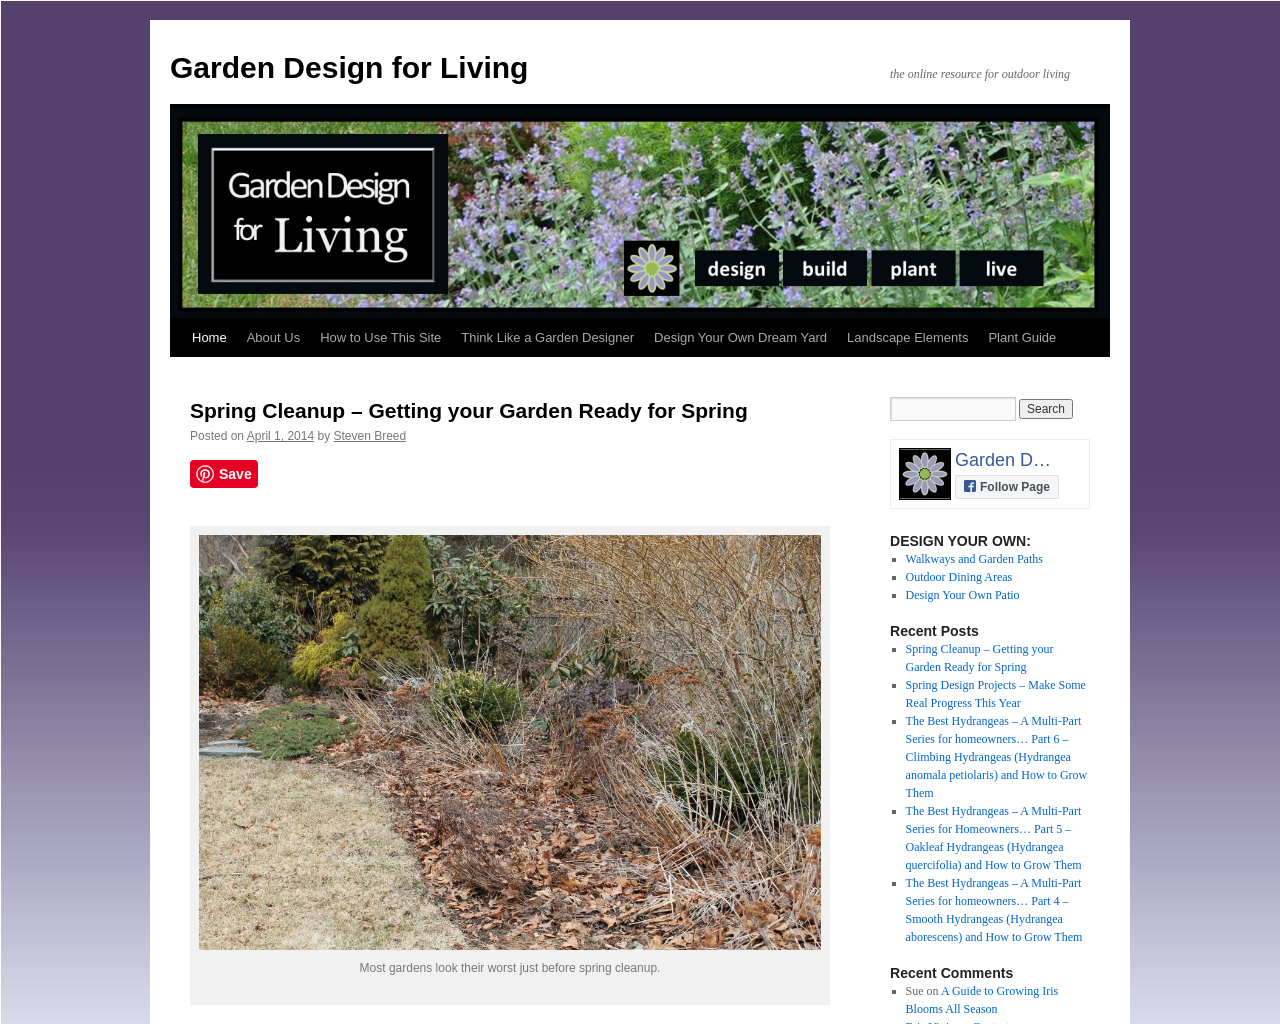 gardendesignforliving.com